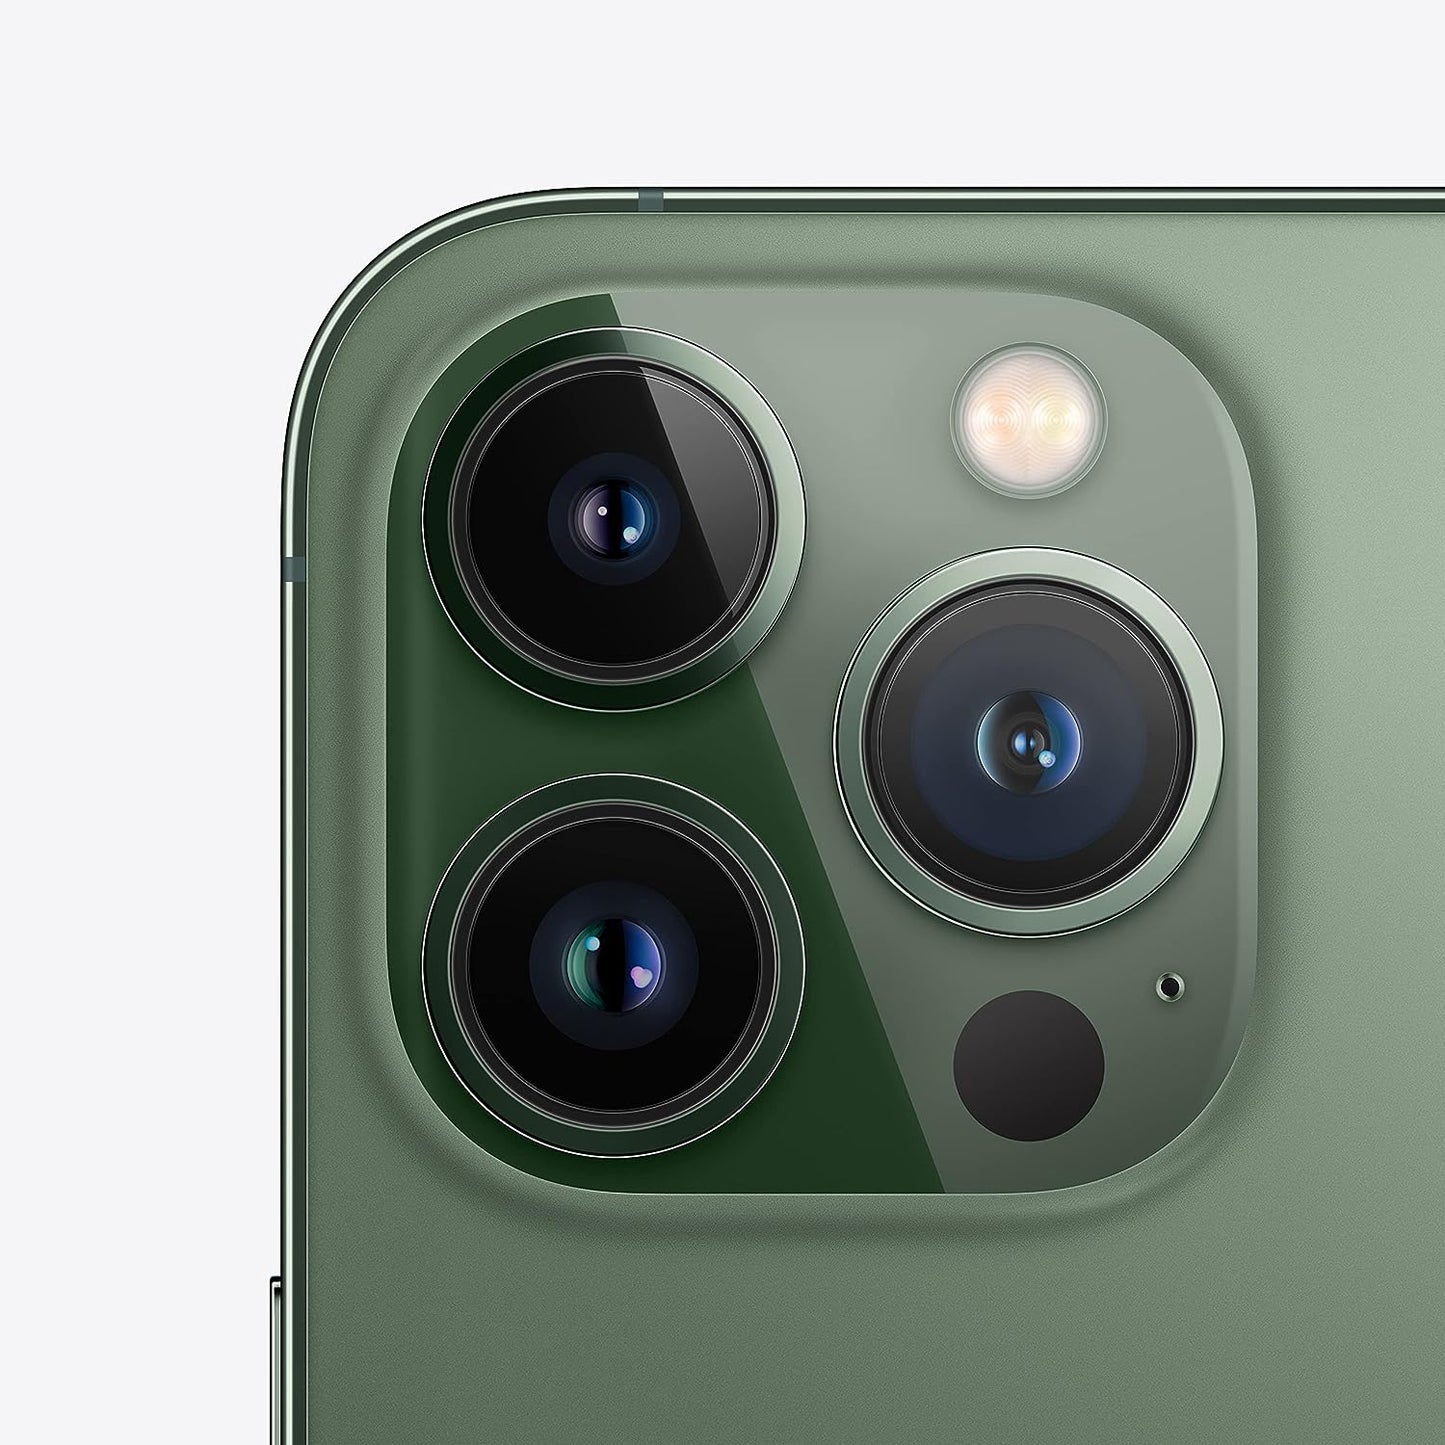 Apple iPhone 13 Pro Max (256 GB) - Alpine Green (Renewed)